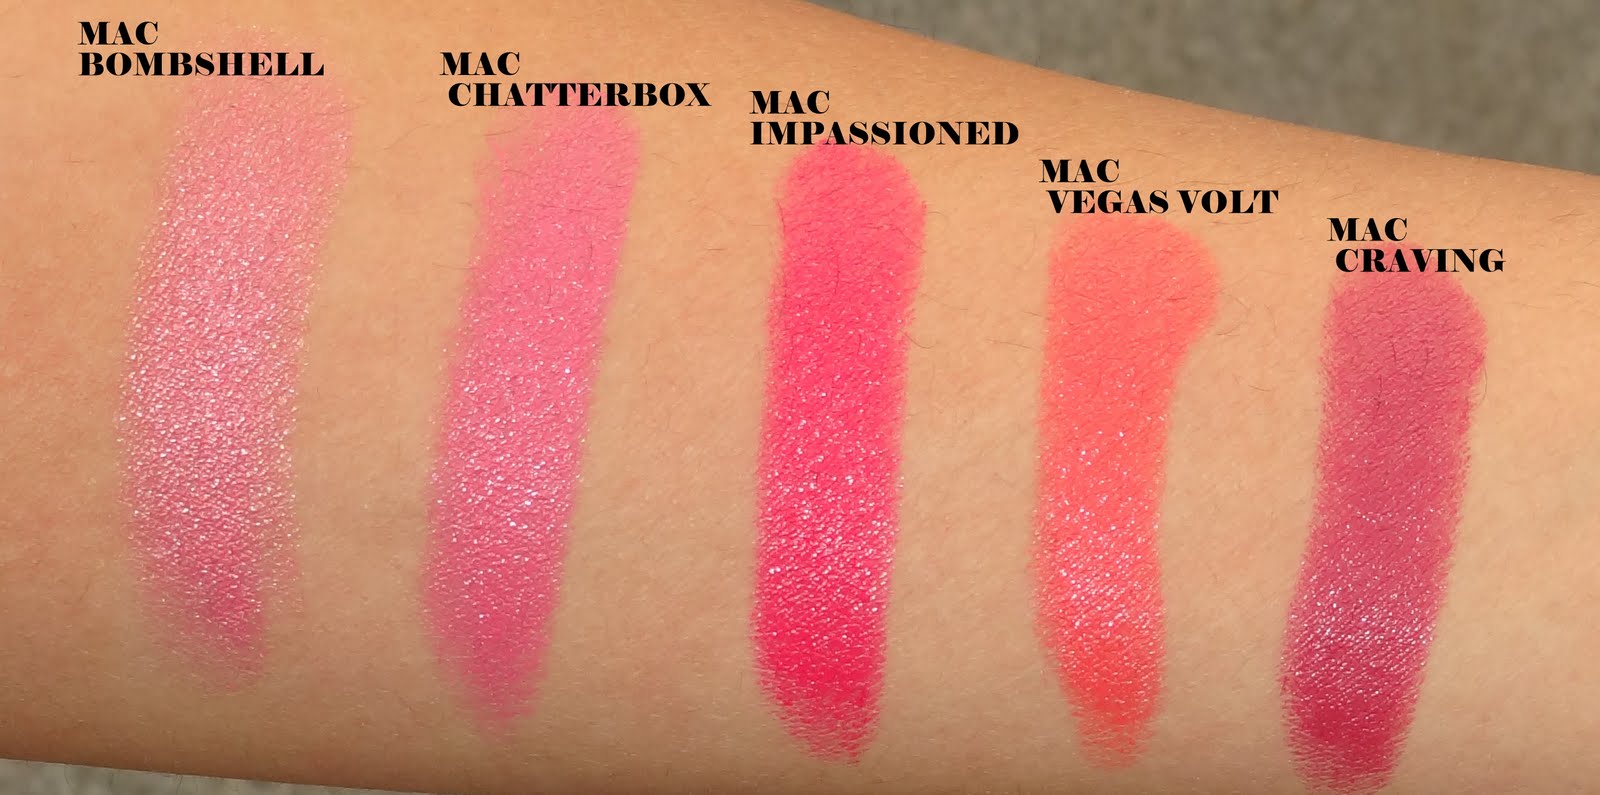 Mac Lipstick Swatches Part 2 Peachesandblush